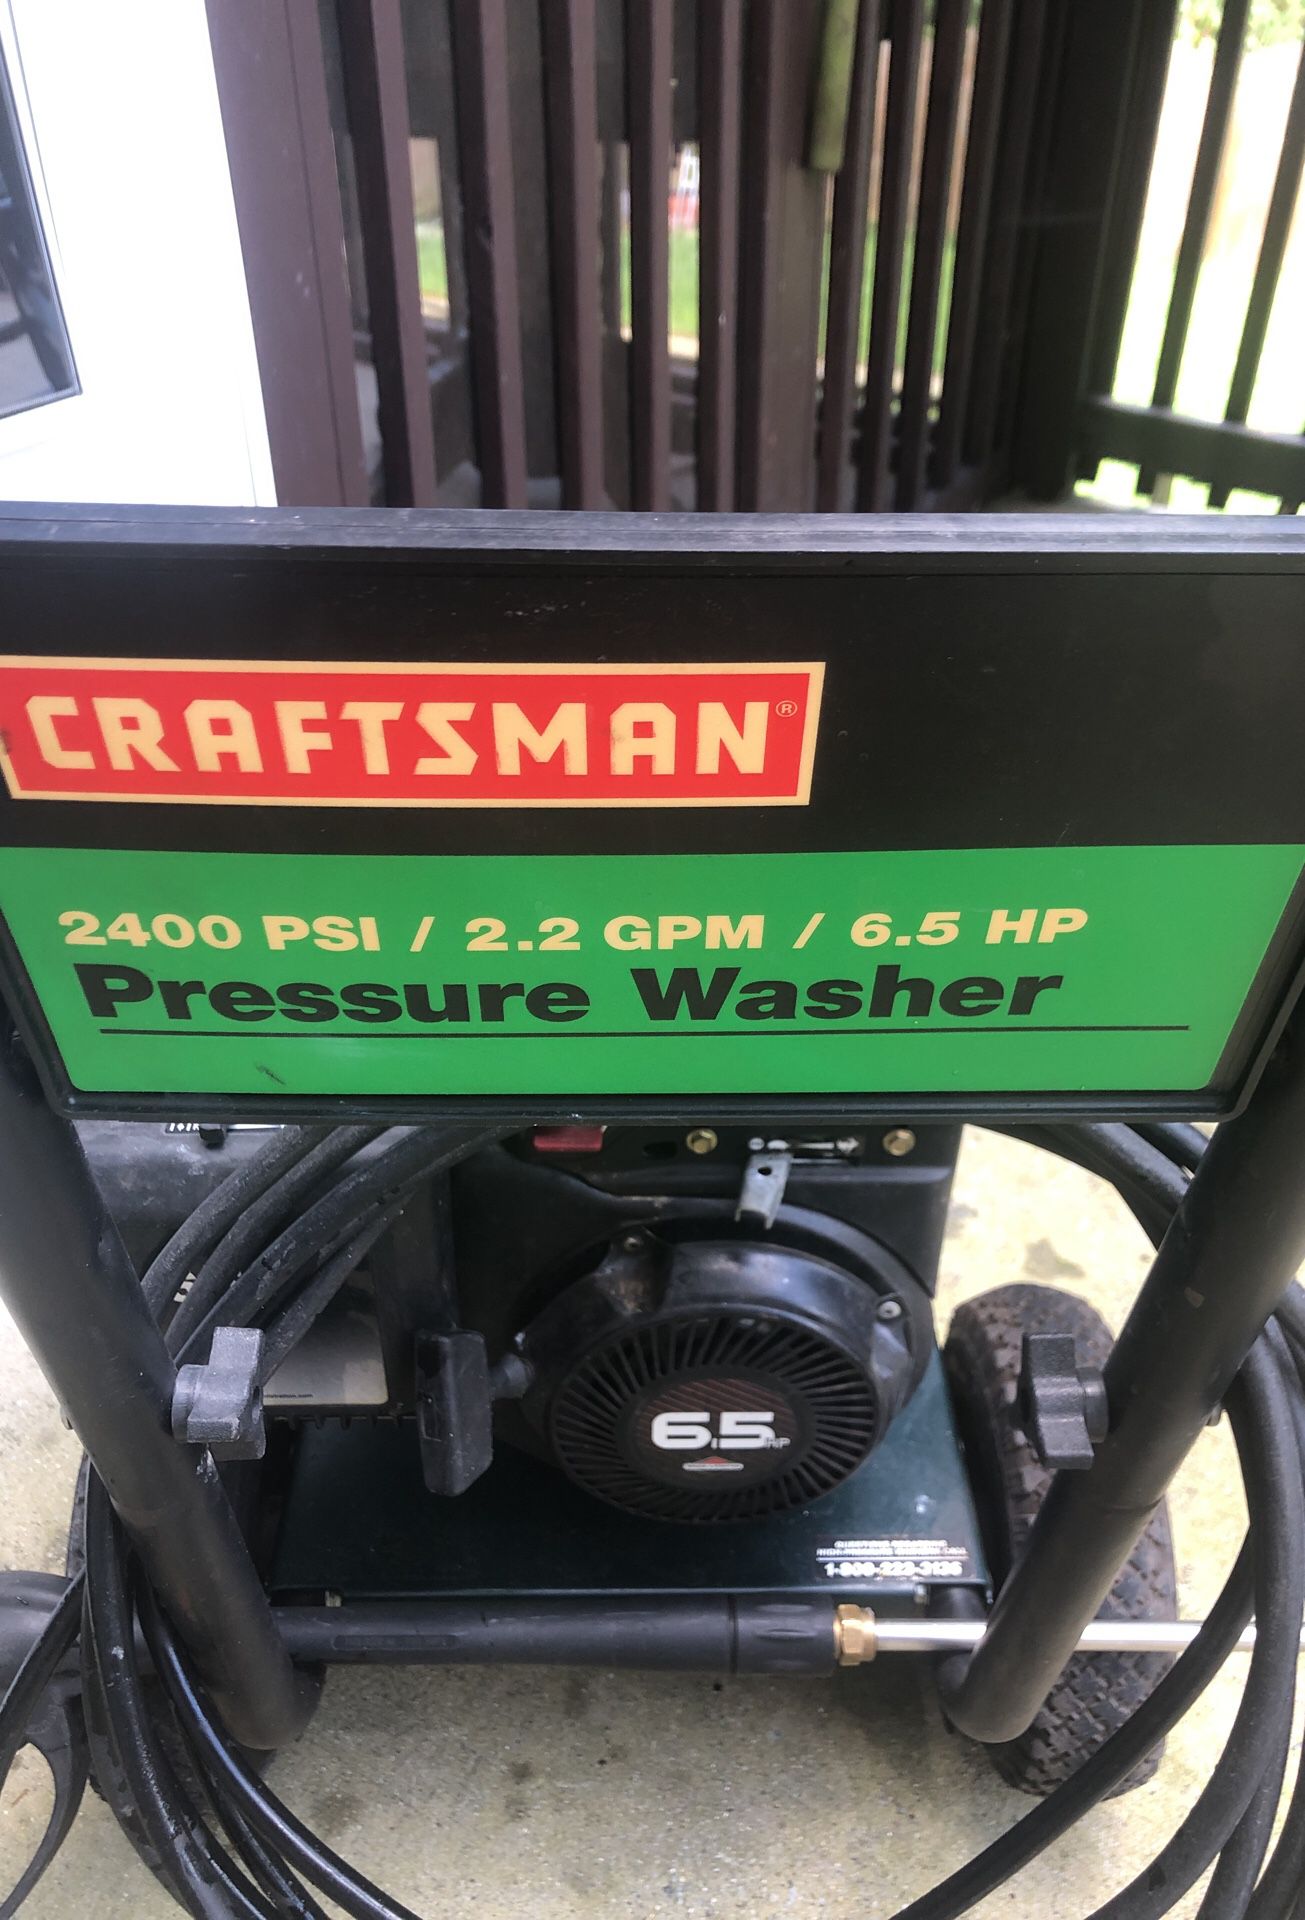 Craftsman 2400 psi / 2.2 gem / 6.5 hp pressure washer